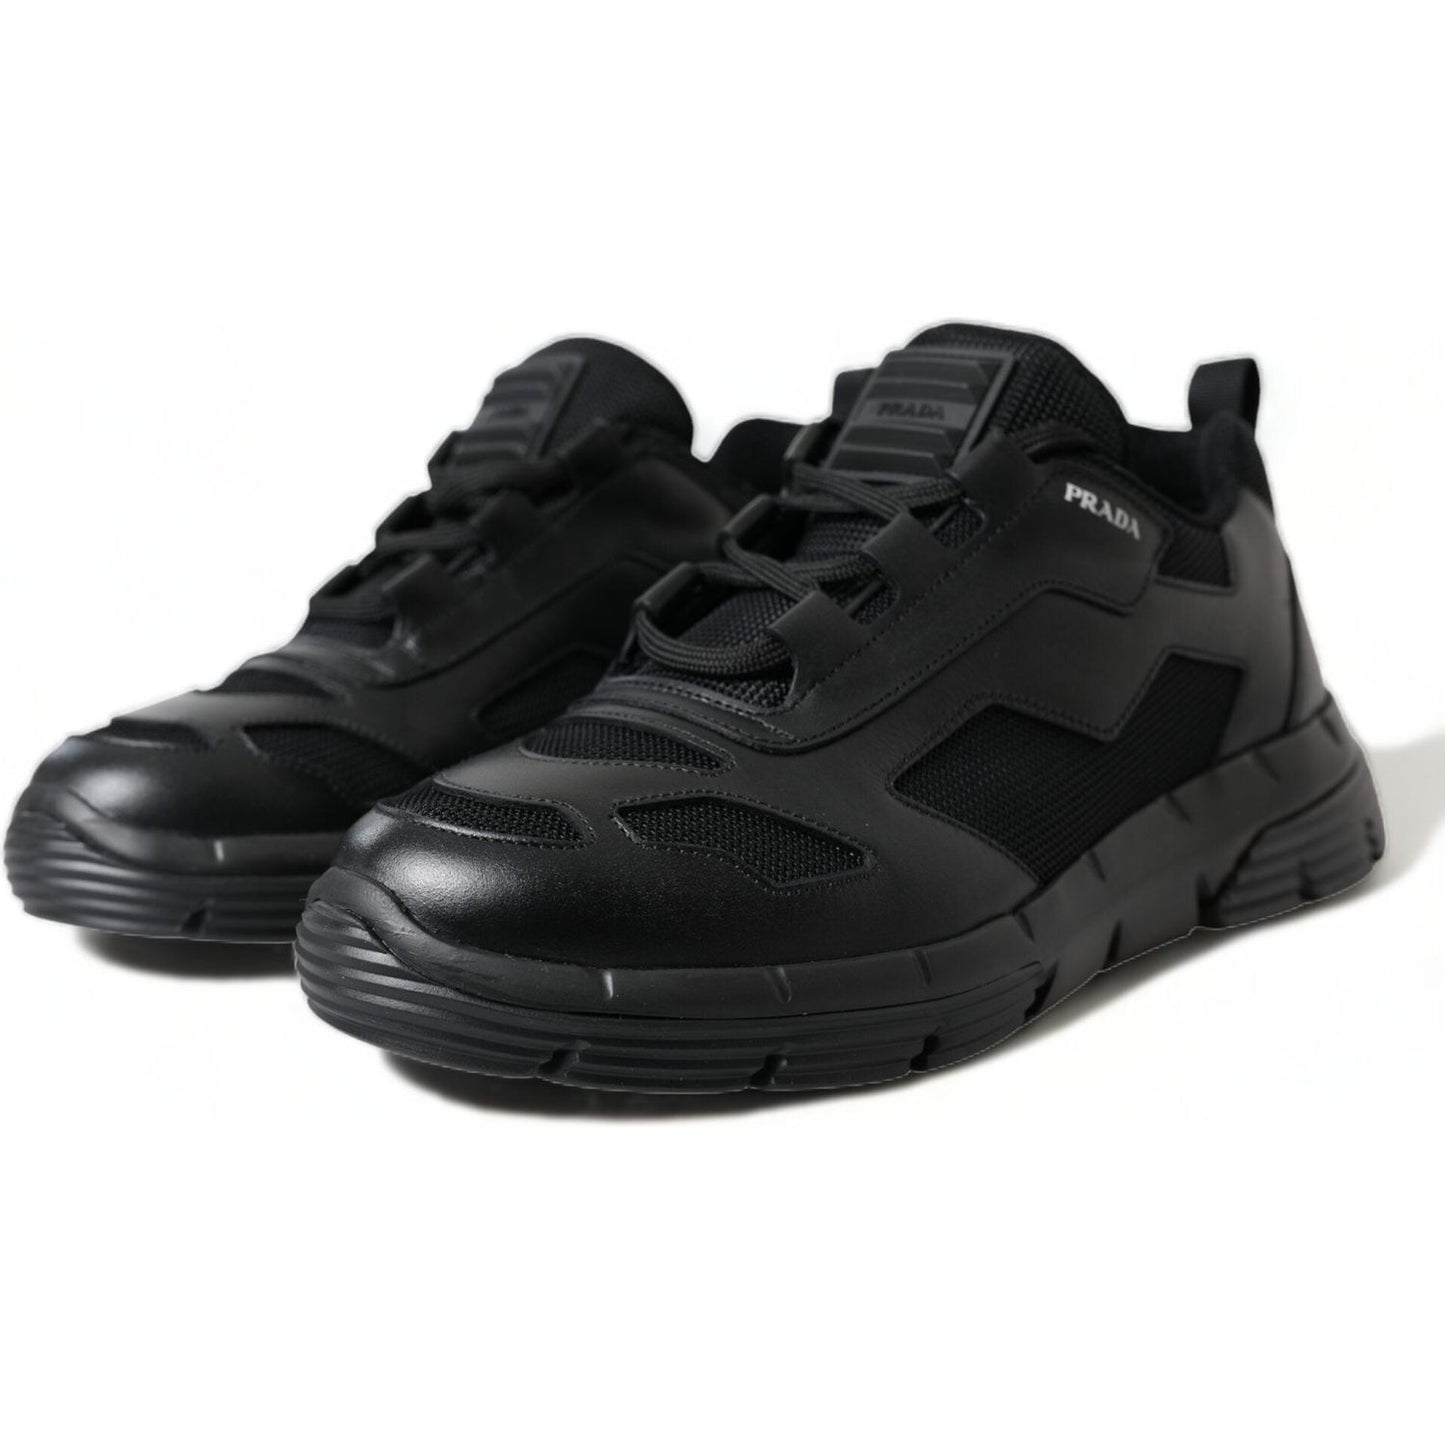 Prada Sleek Low Top Leather Sneakers in Timeless Black black-mesh-panel-low-top-twist-trainers-sneakers-shoes 465A4089-BG-scaled-361c13fc-037.jpg